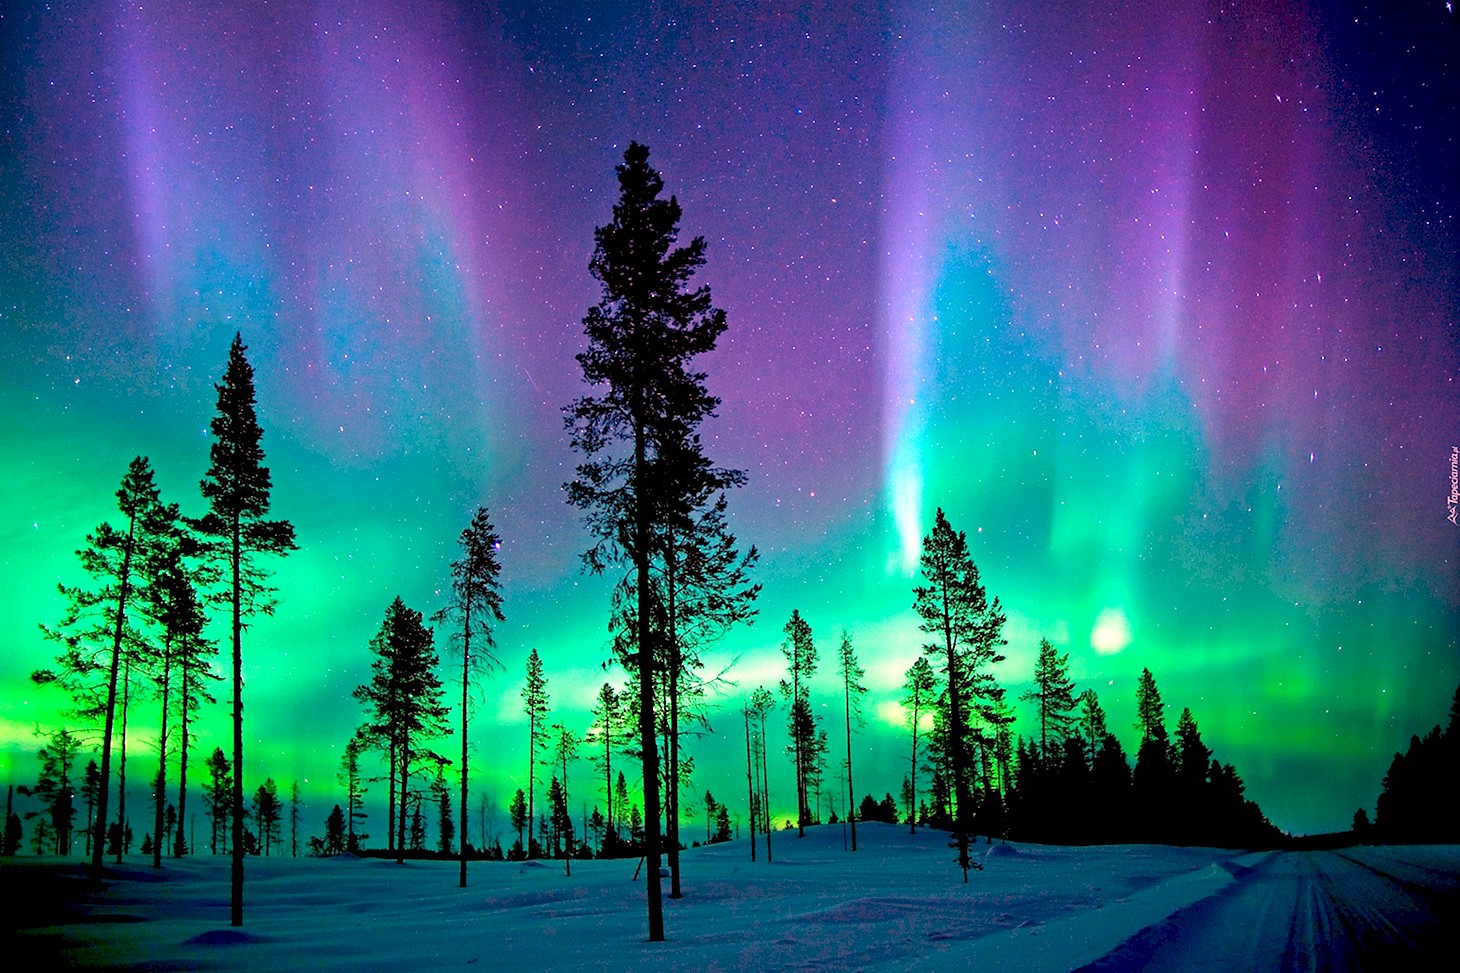 Aurora Borealis Северное сияние